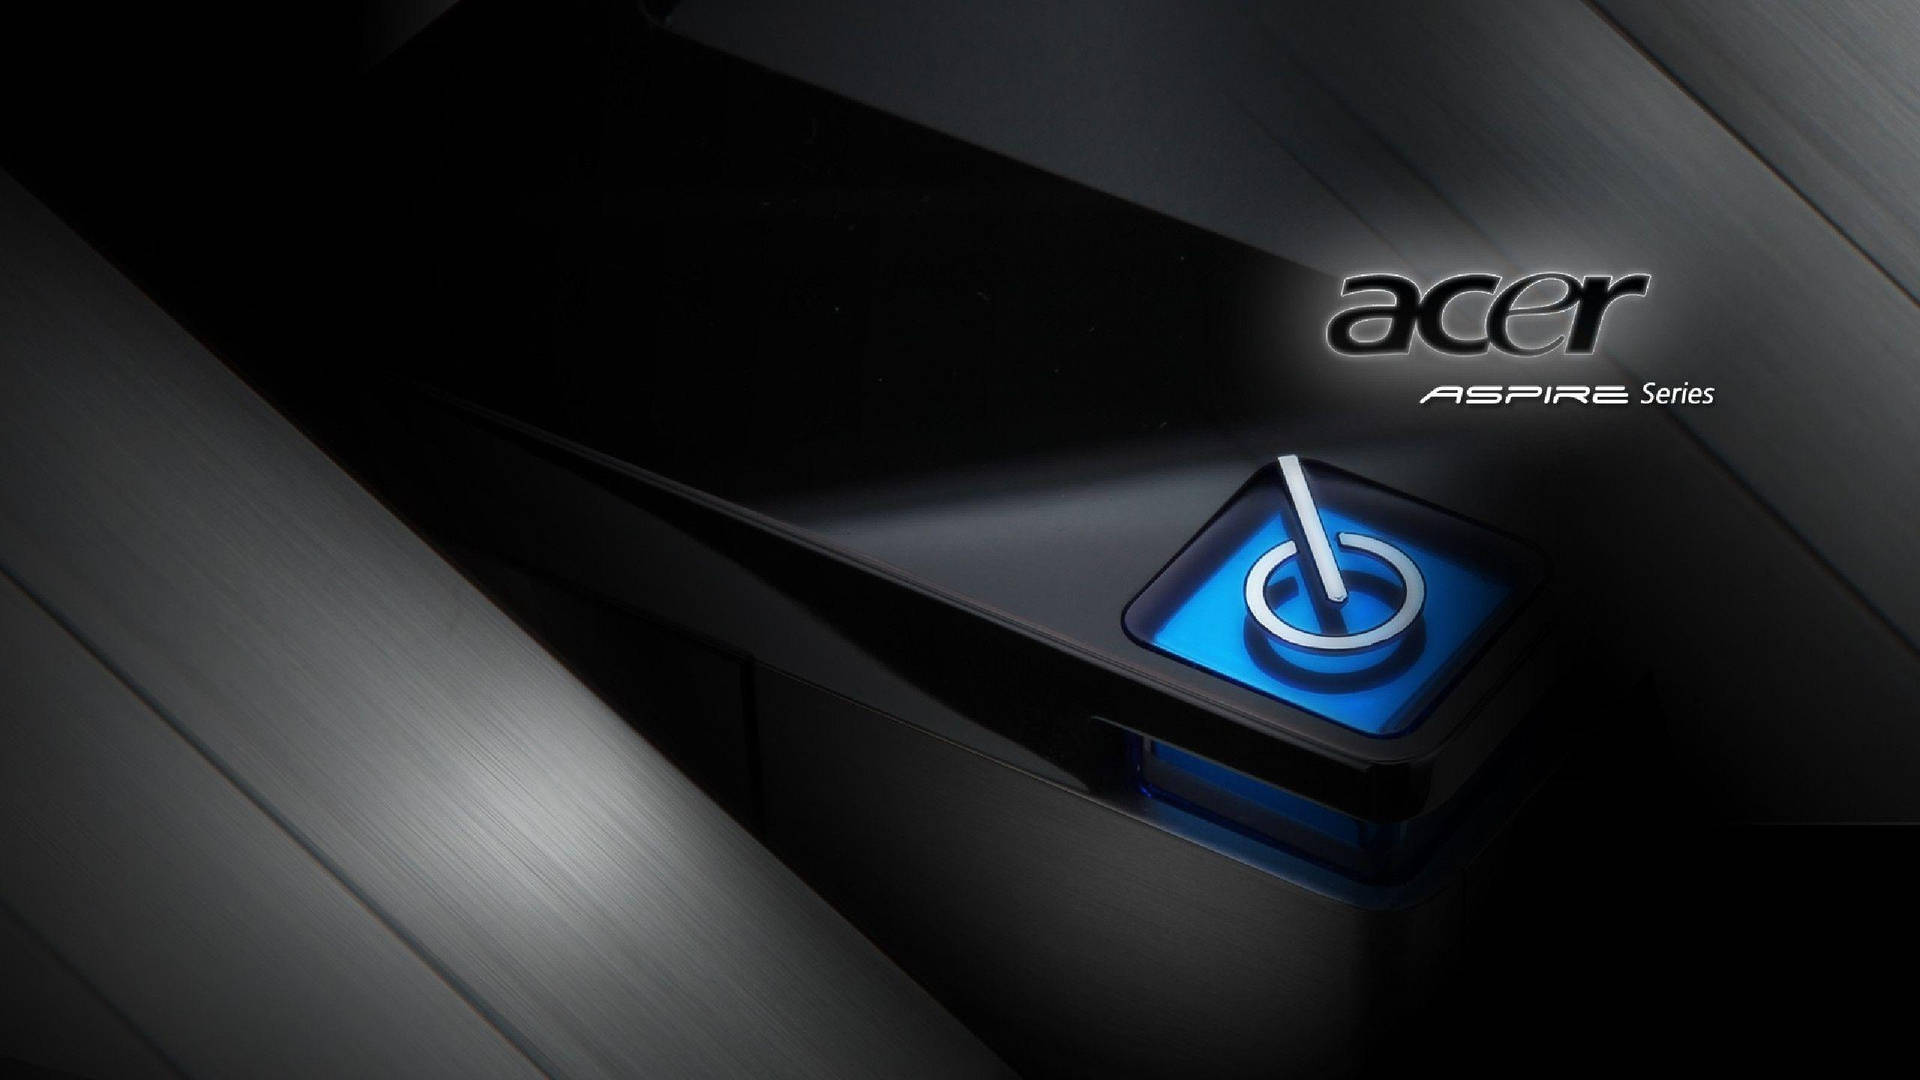 Black Acer Aspire Series Logo Picture